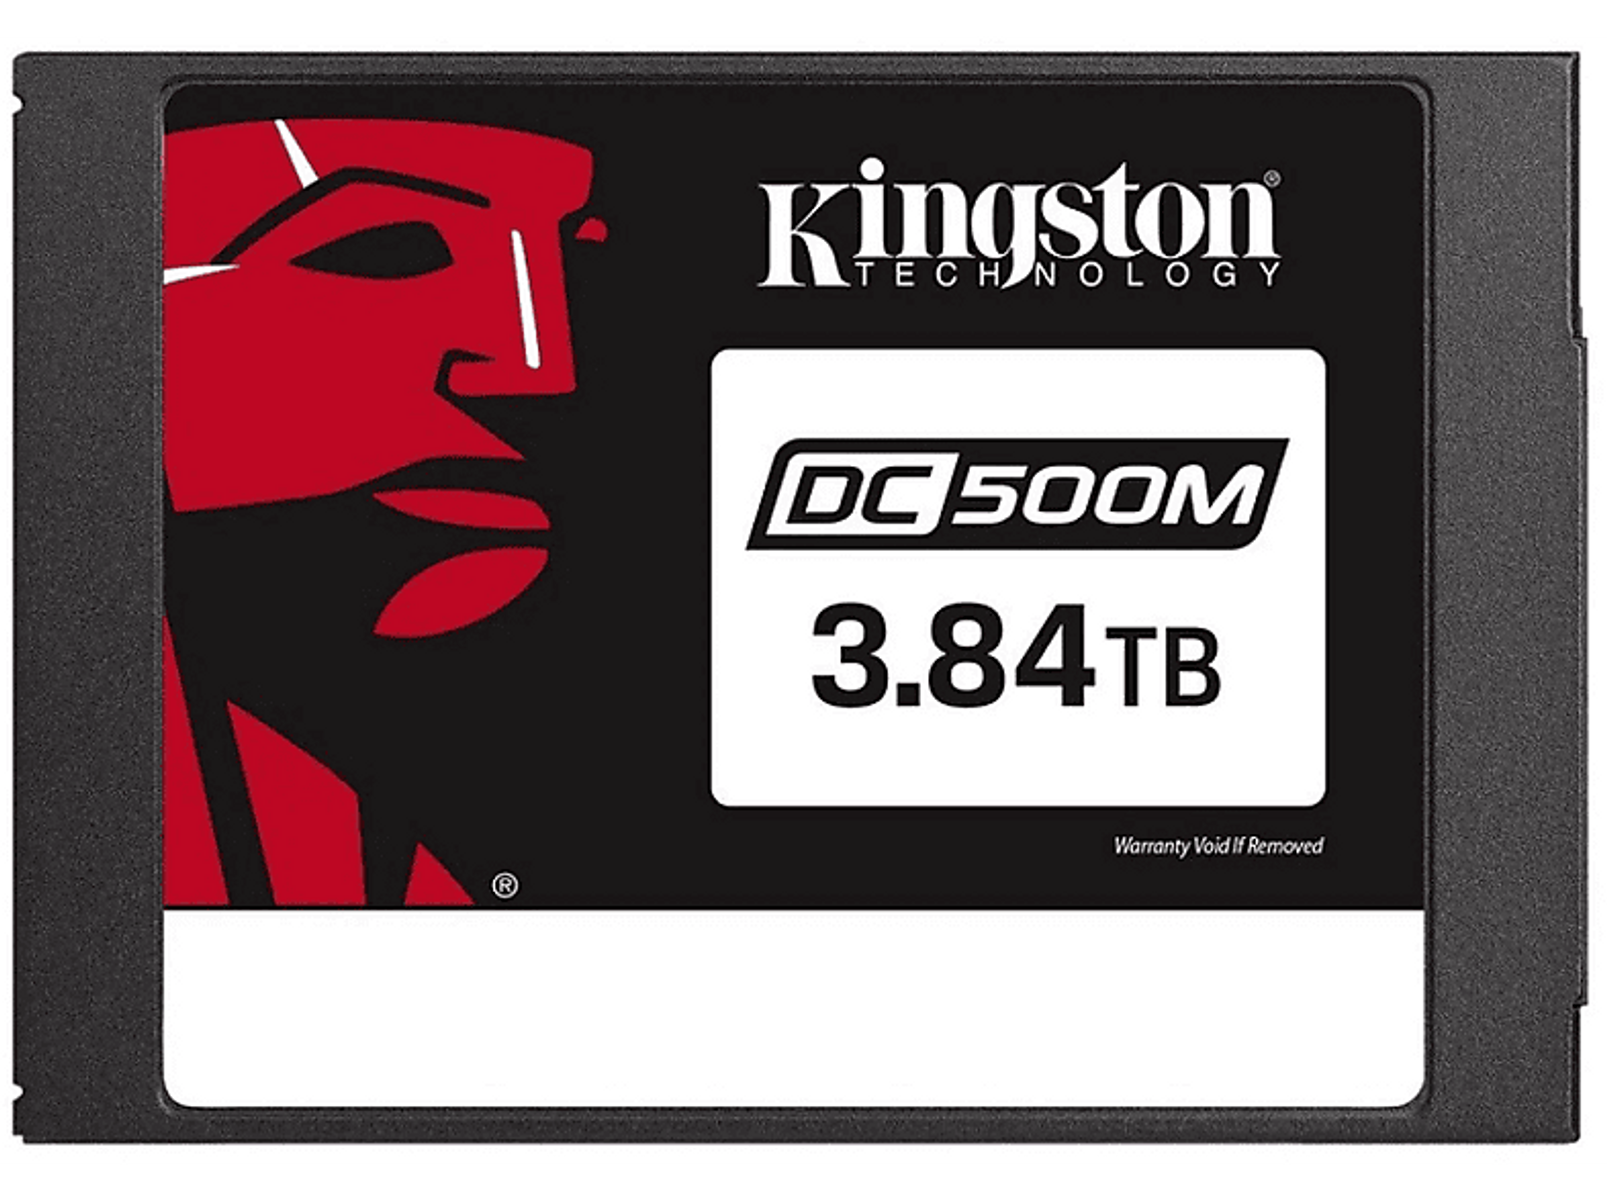 KINGSTON TECHNOLOGY SSD, SEDC500M/3840G, 2,5 HDD, 3840 Zoll, intern GB